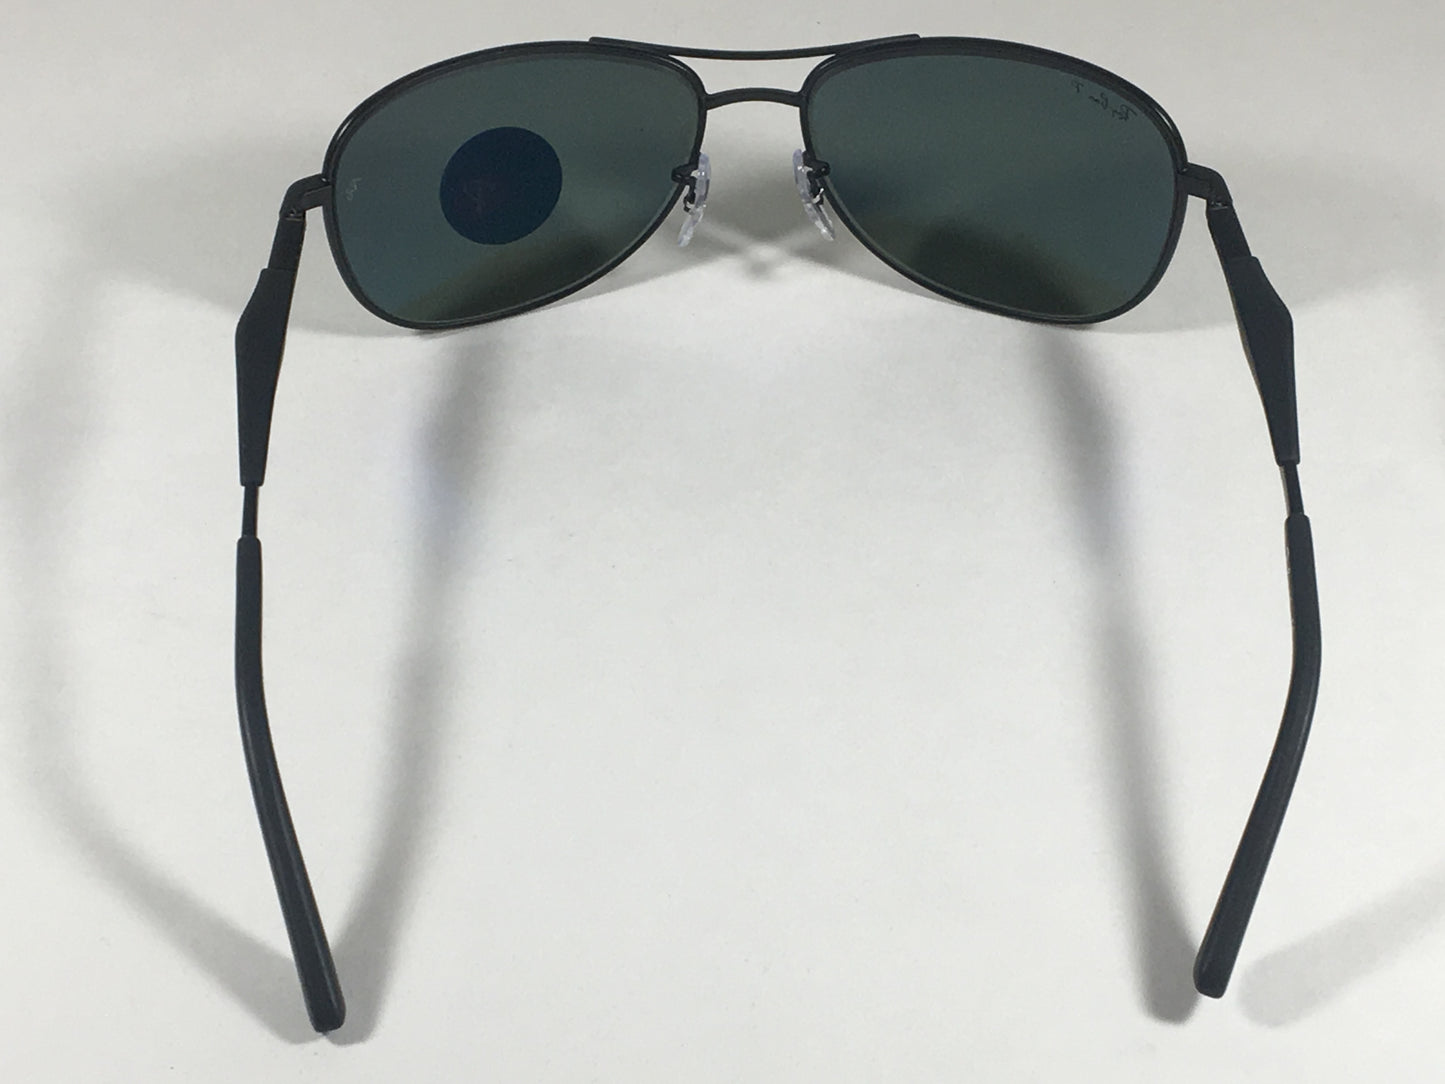 Ray-Ban Polarized Pilot Sunglasses Rb3519 006/9A Aviator Matte Black Frame Green Lens - Sunglasses